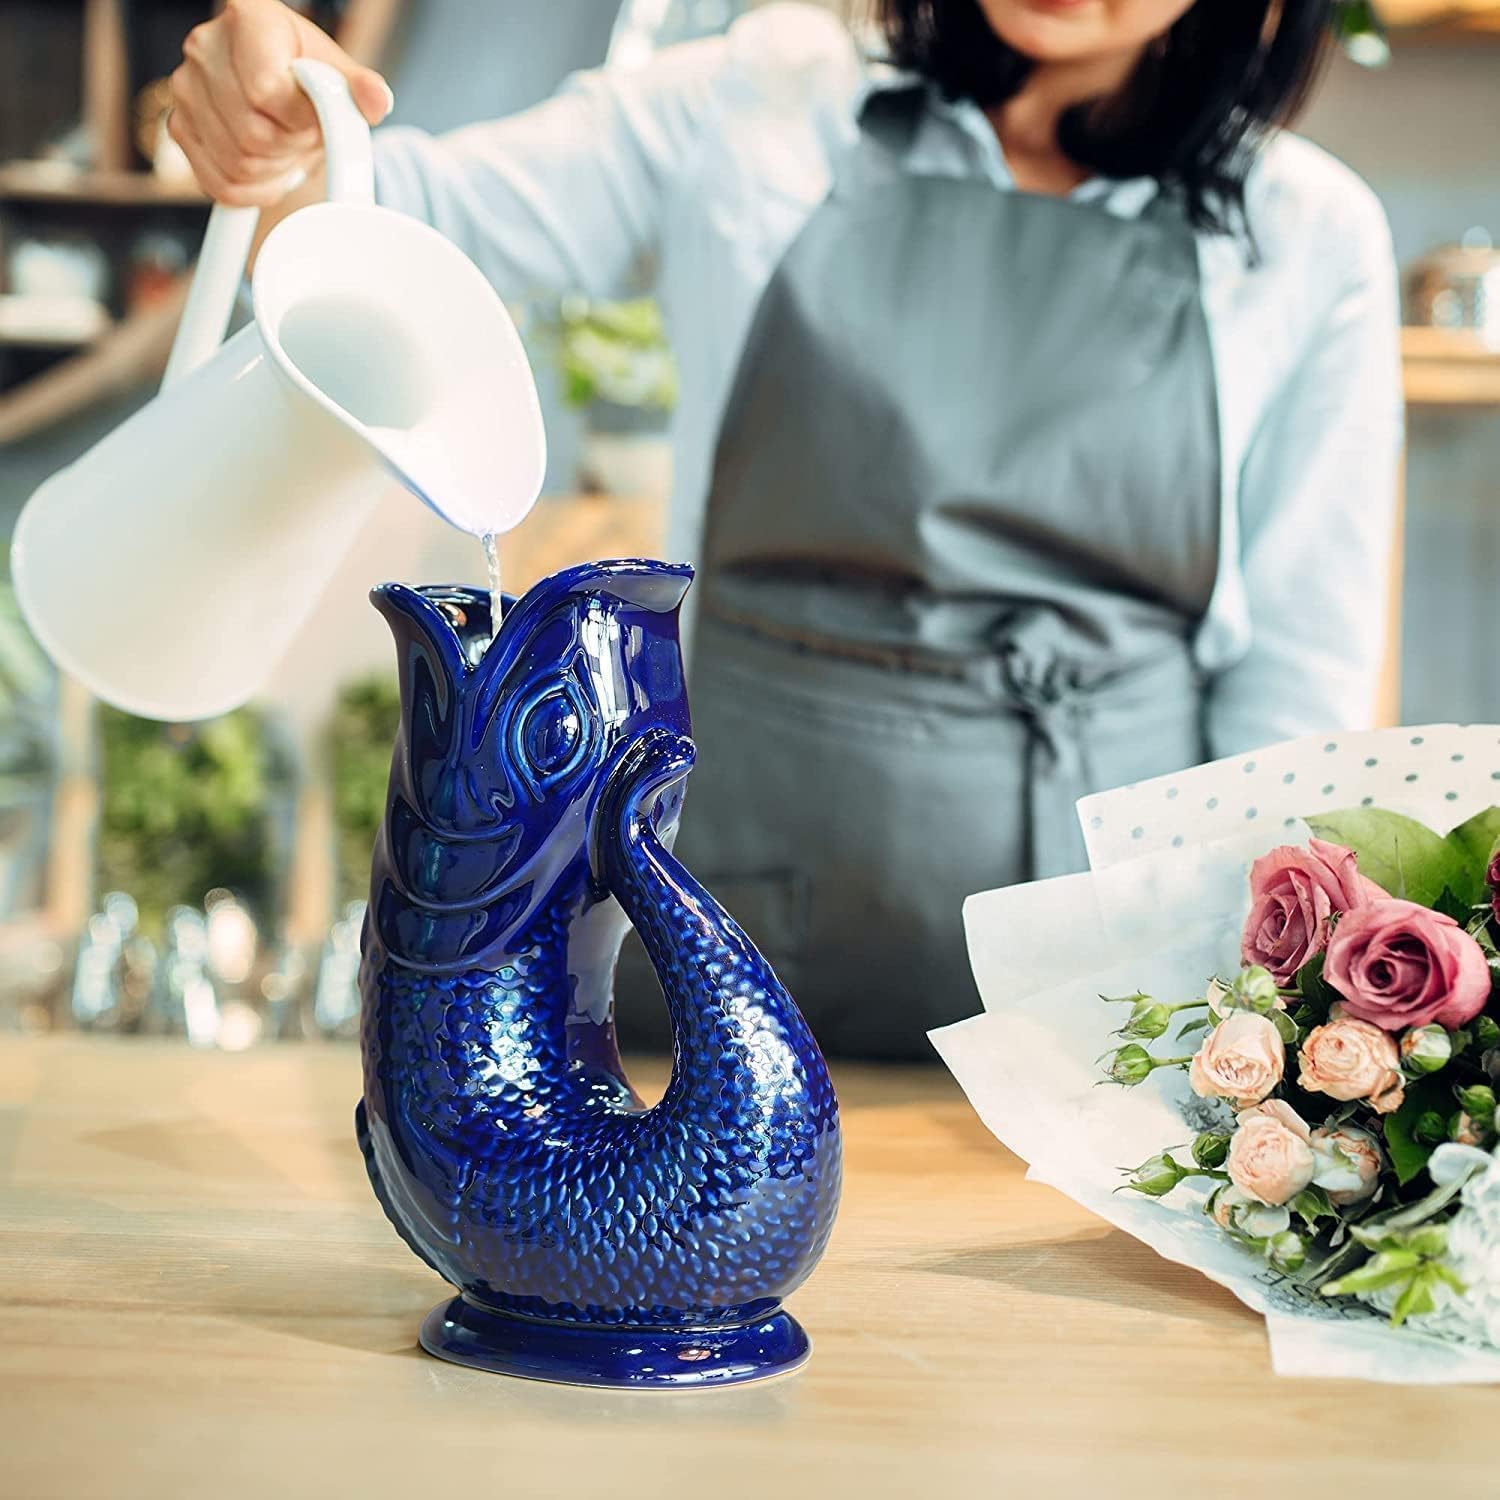 Ceramic Fish Shaped Jug -The Dark Cobalt Blue 1.5L Litre  Decorative Vase / Cocktail, Water and Gin Jug and Pitcher